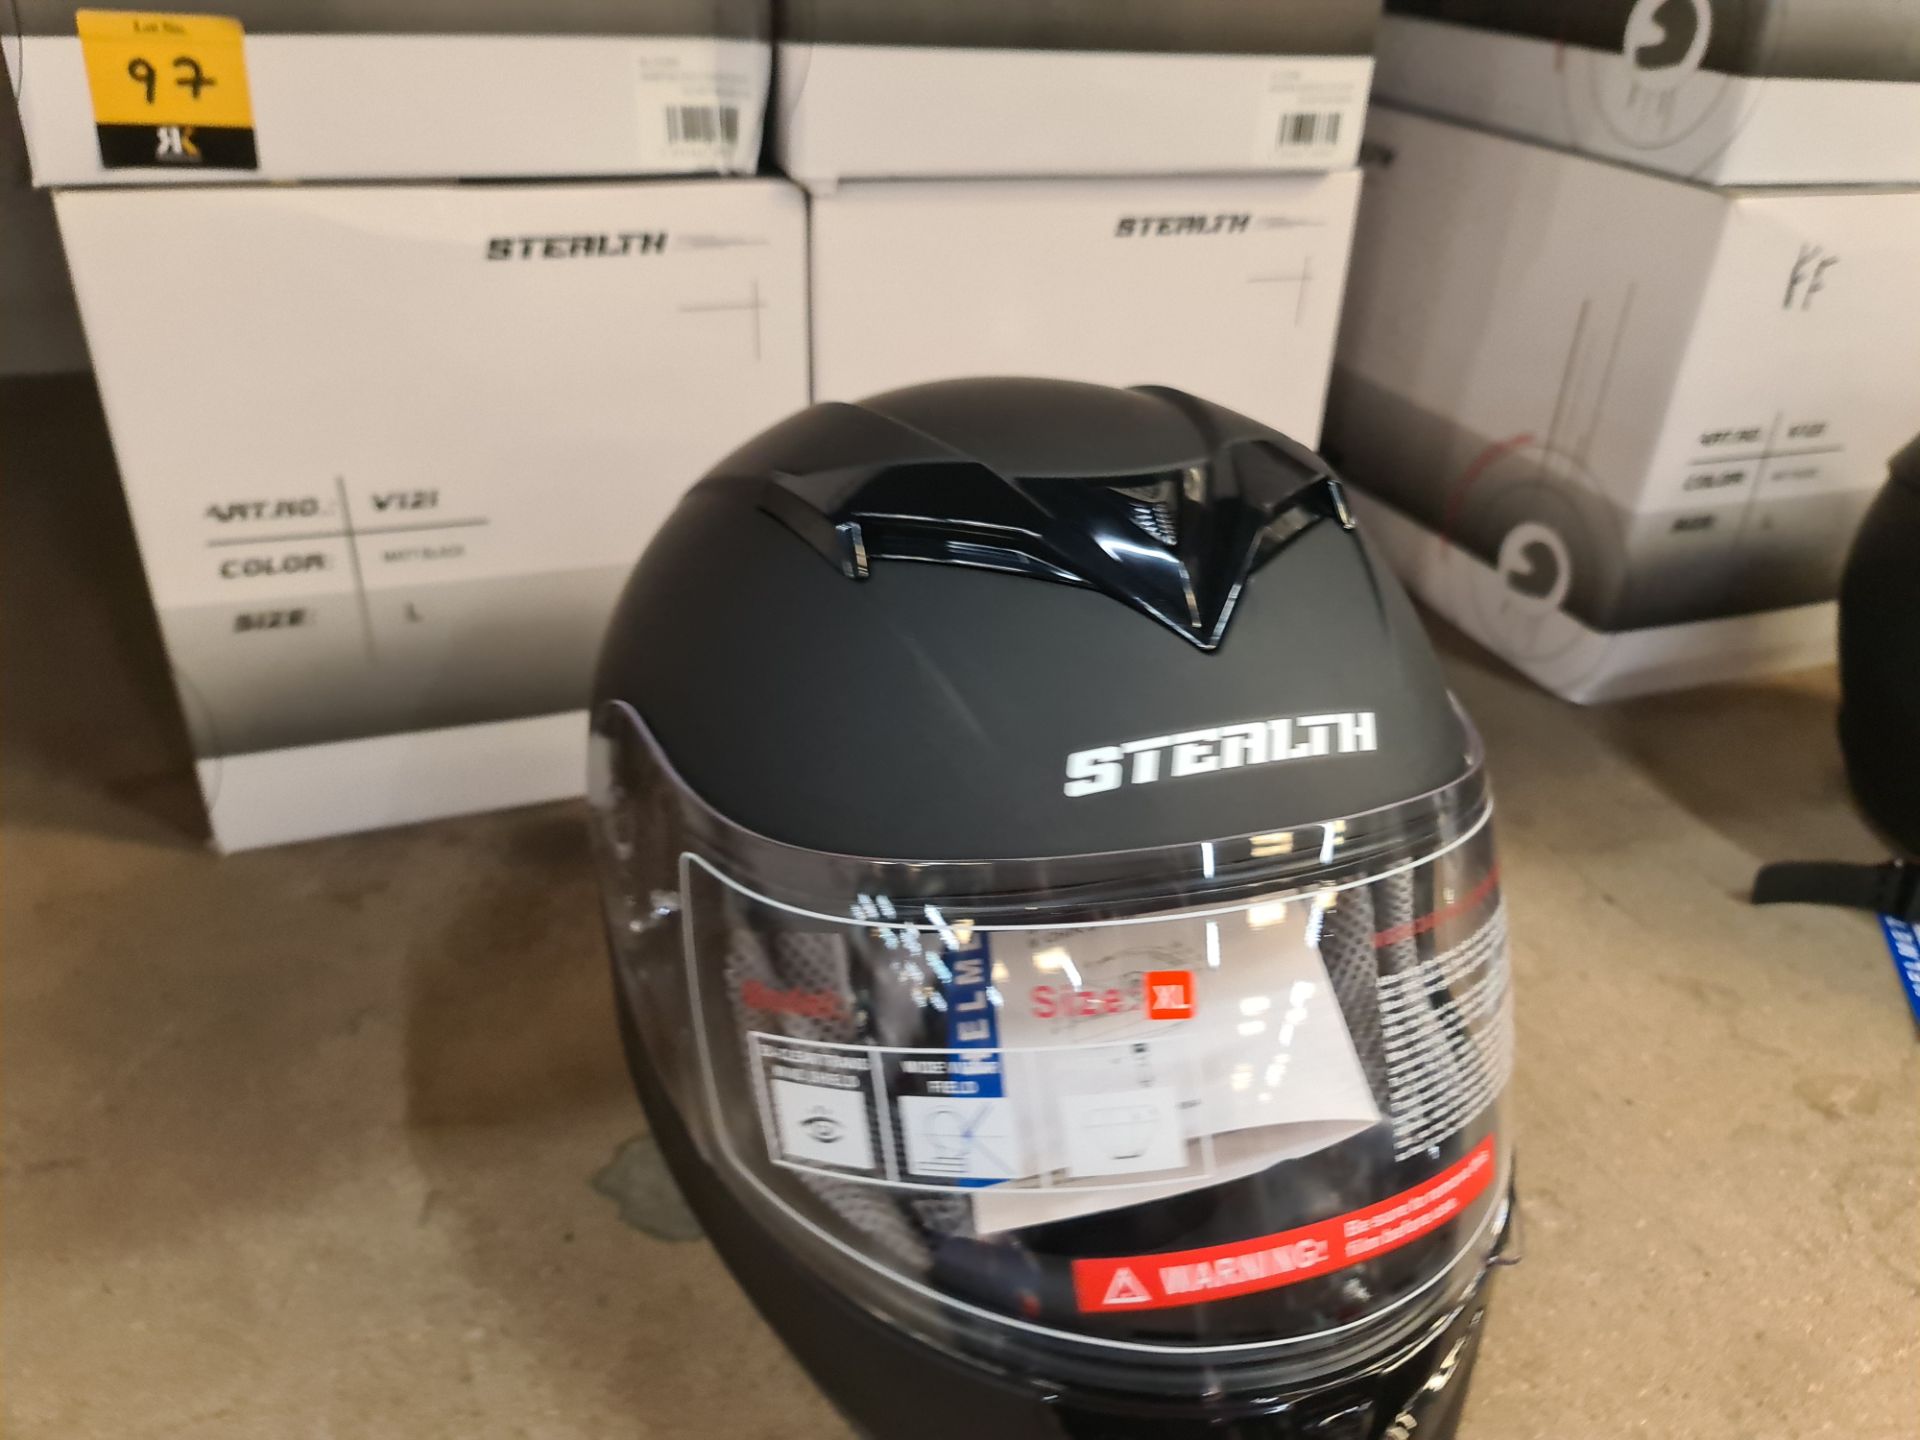 5 off Stealth V121 matt black helmets - 2xM, 2xL, 1xXL - Image 5 of 7